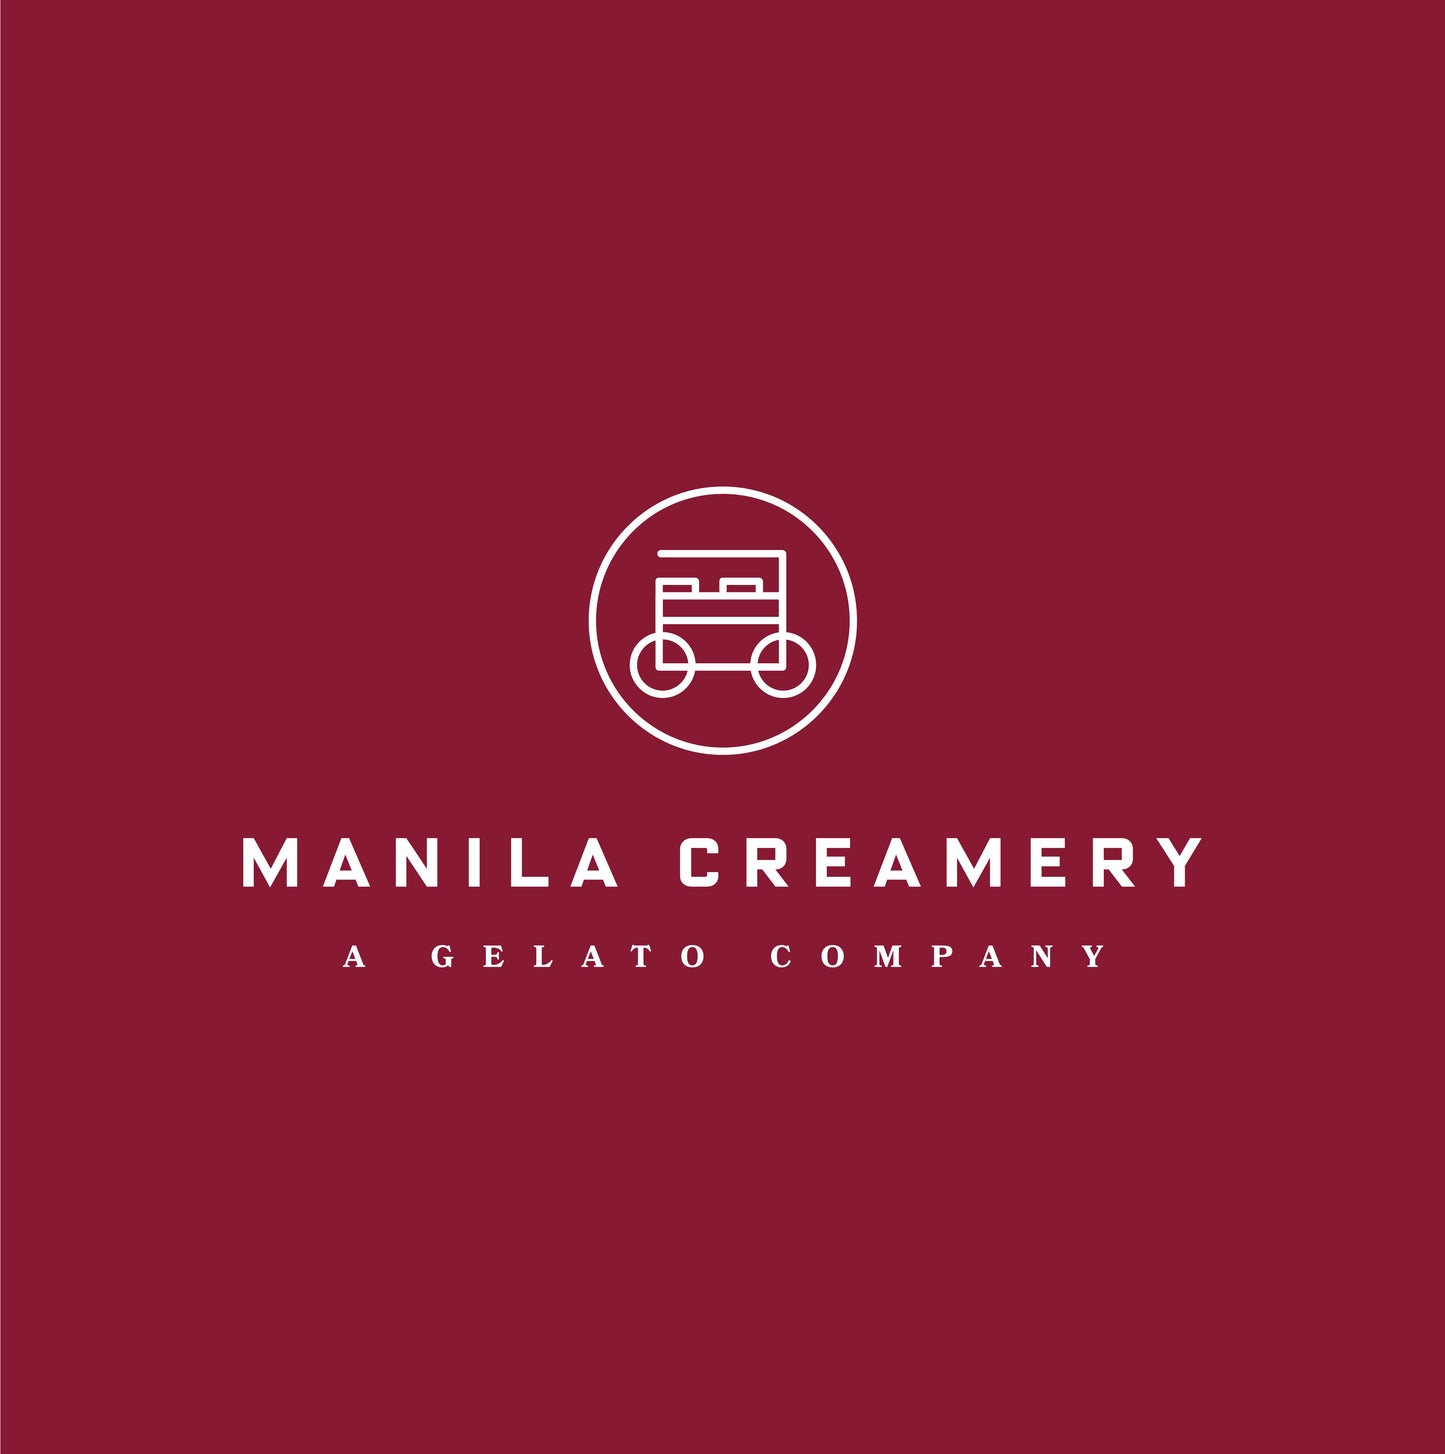 Manila Creamery Gelato